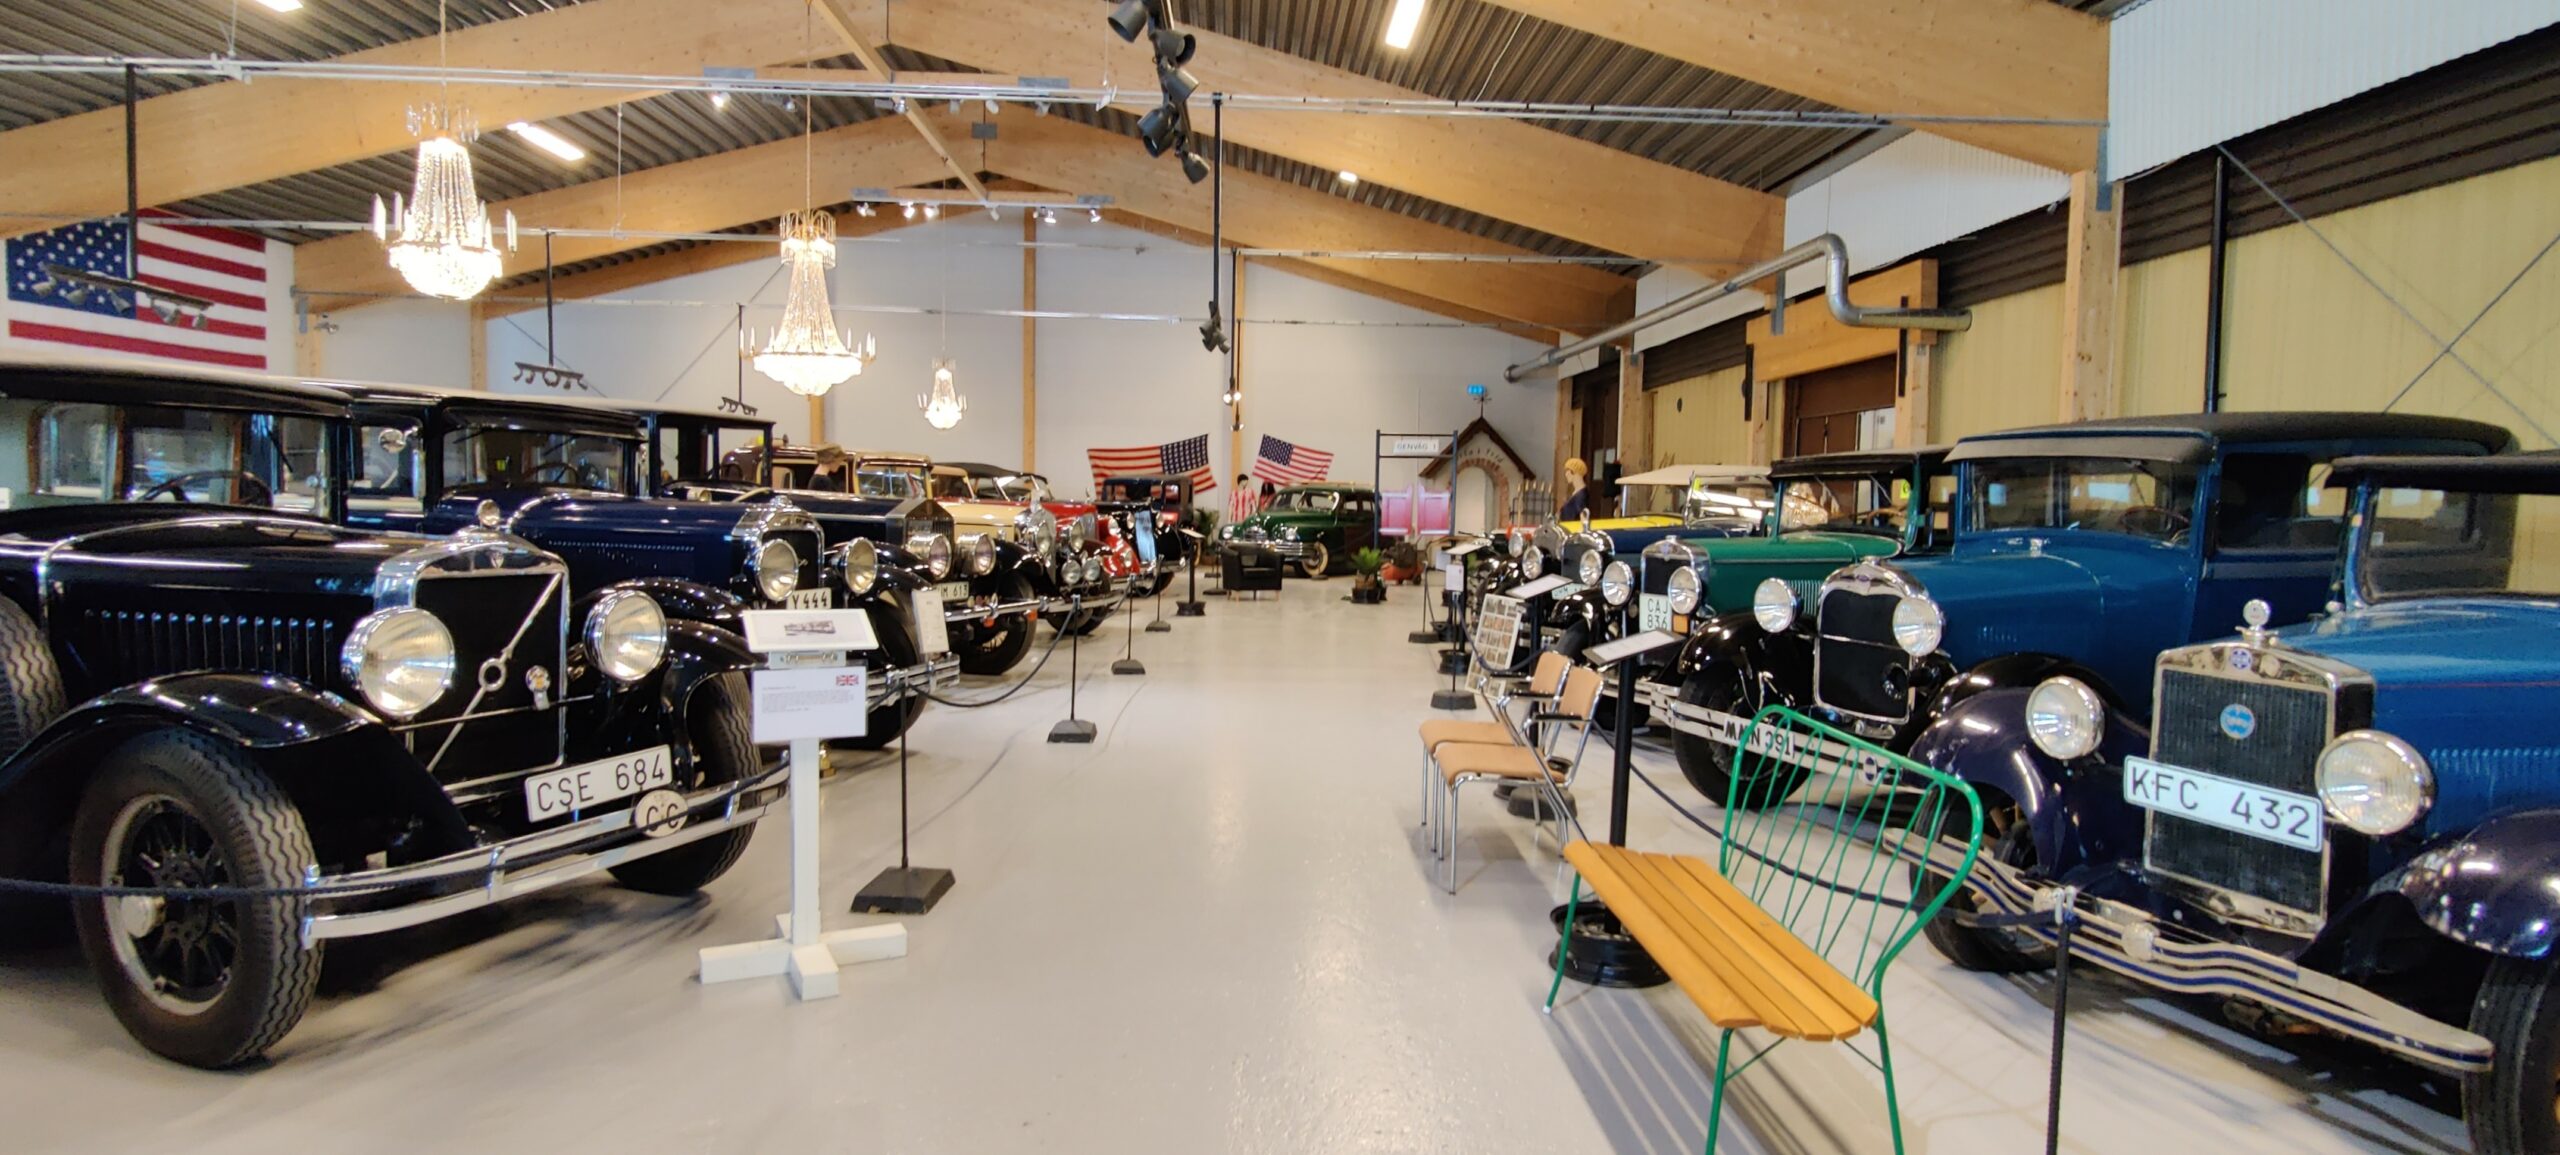 Bilmuseum i Härnösand